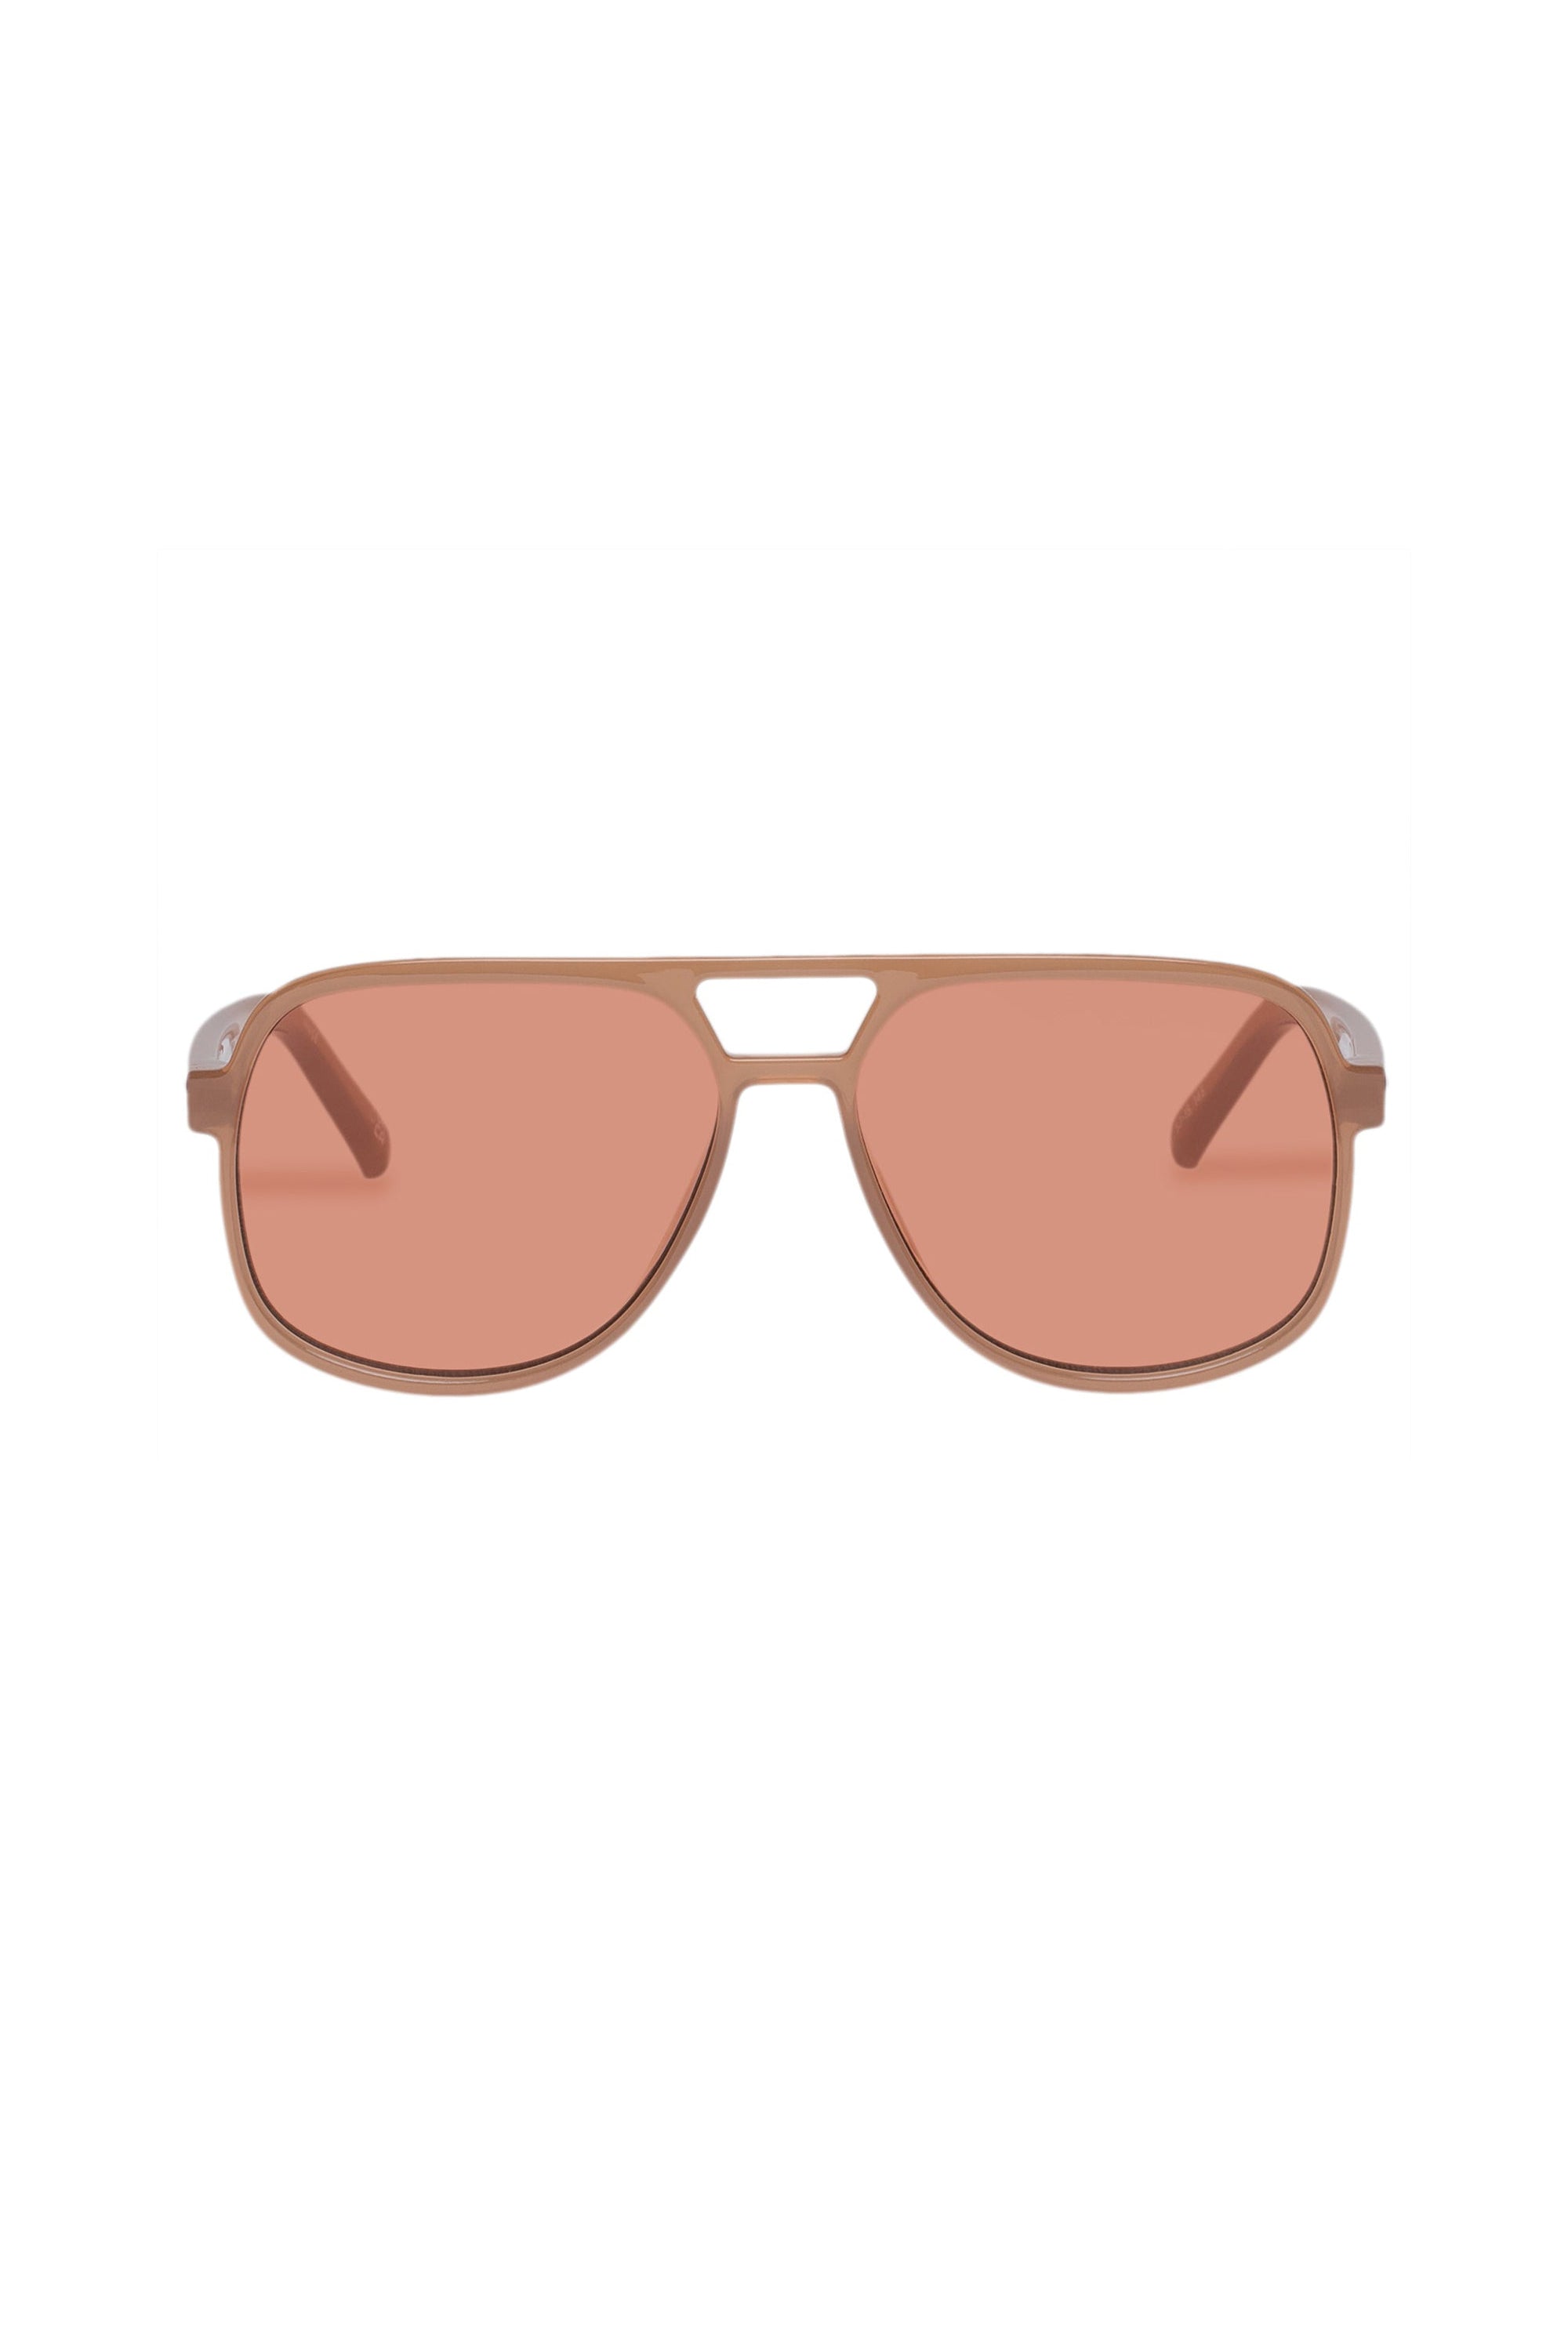 Le Specs Trailbreaker Sunglasses - Clay // Le Sustain - RUM Amsterdam